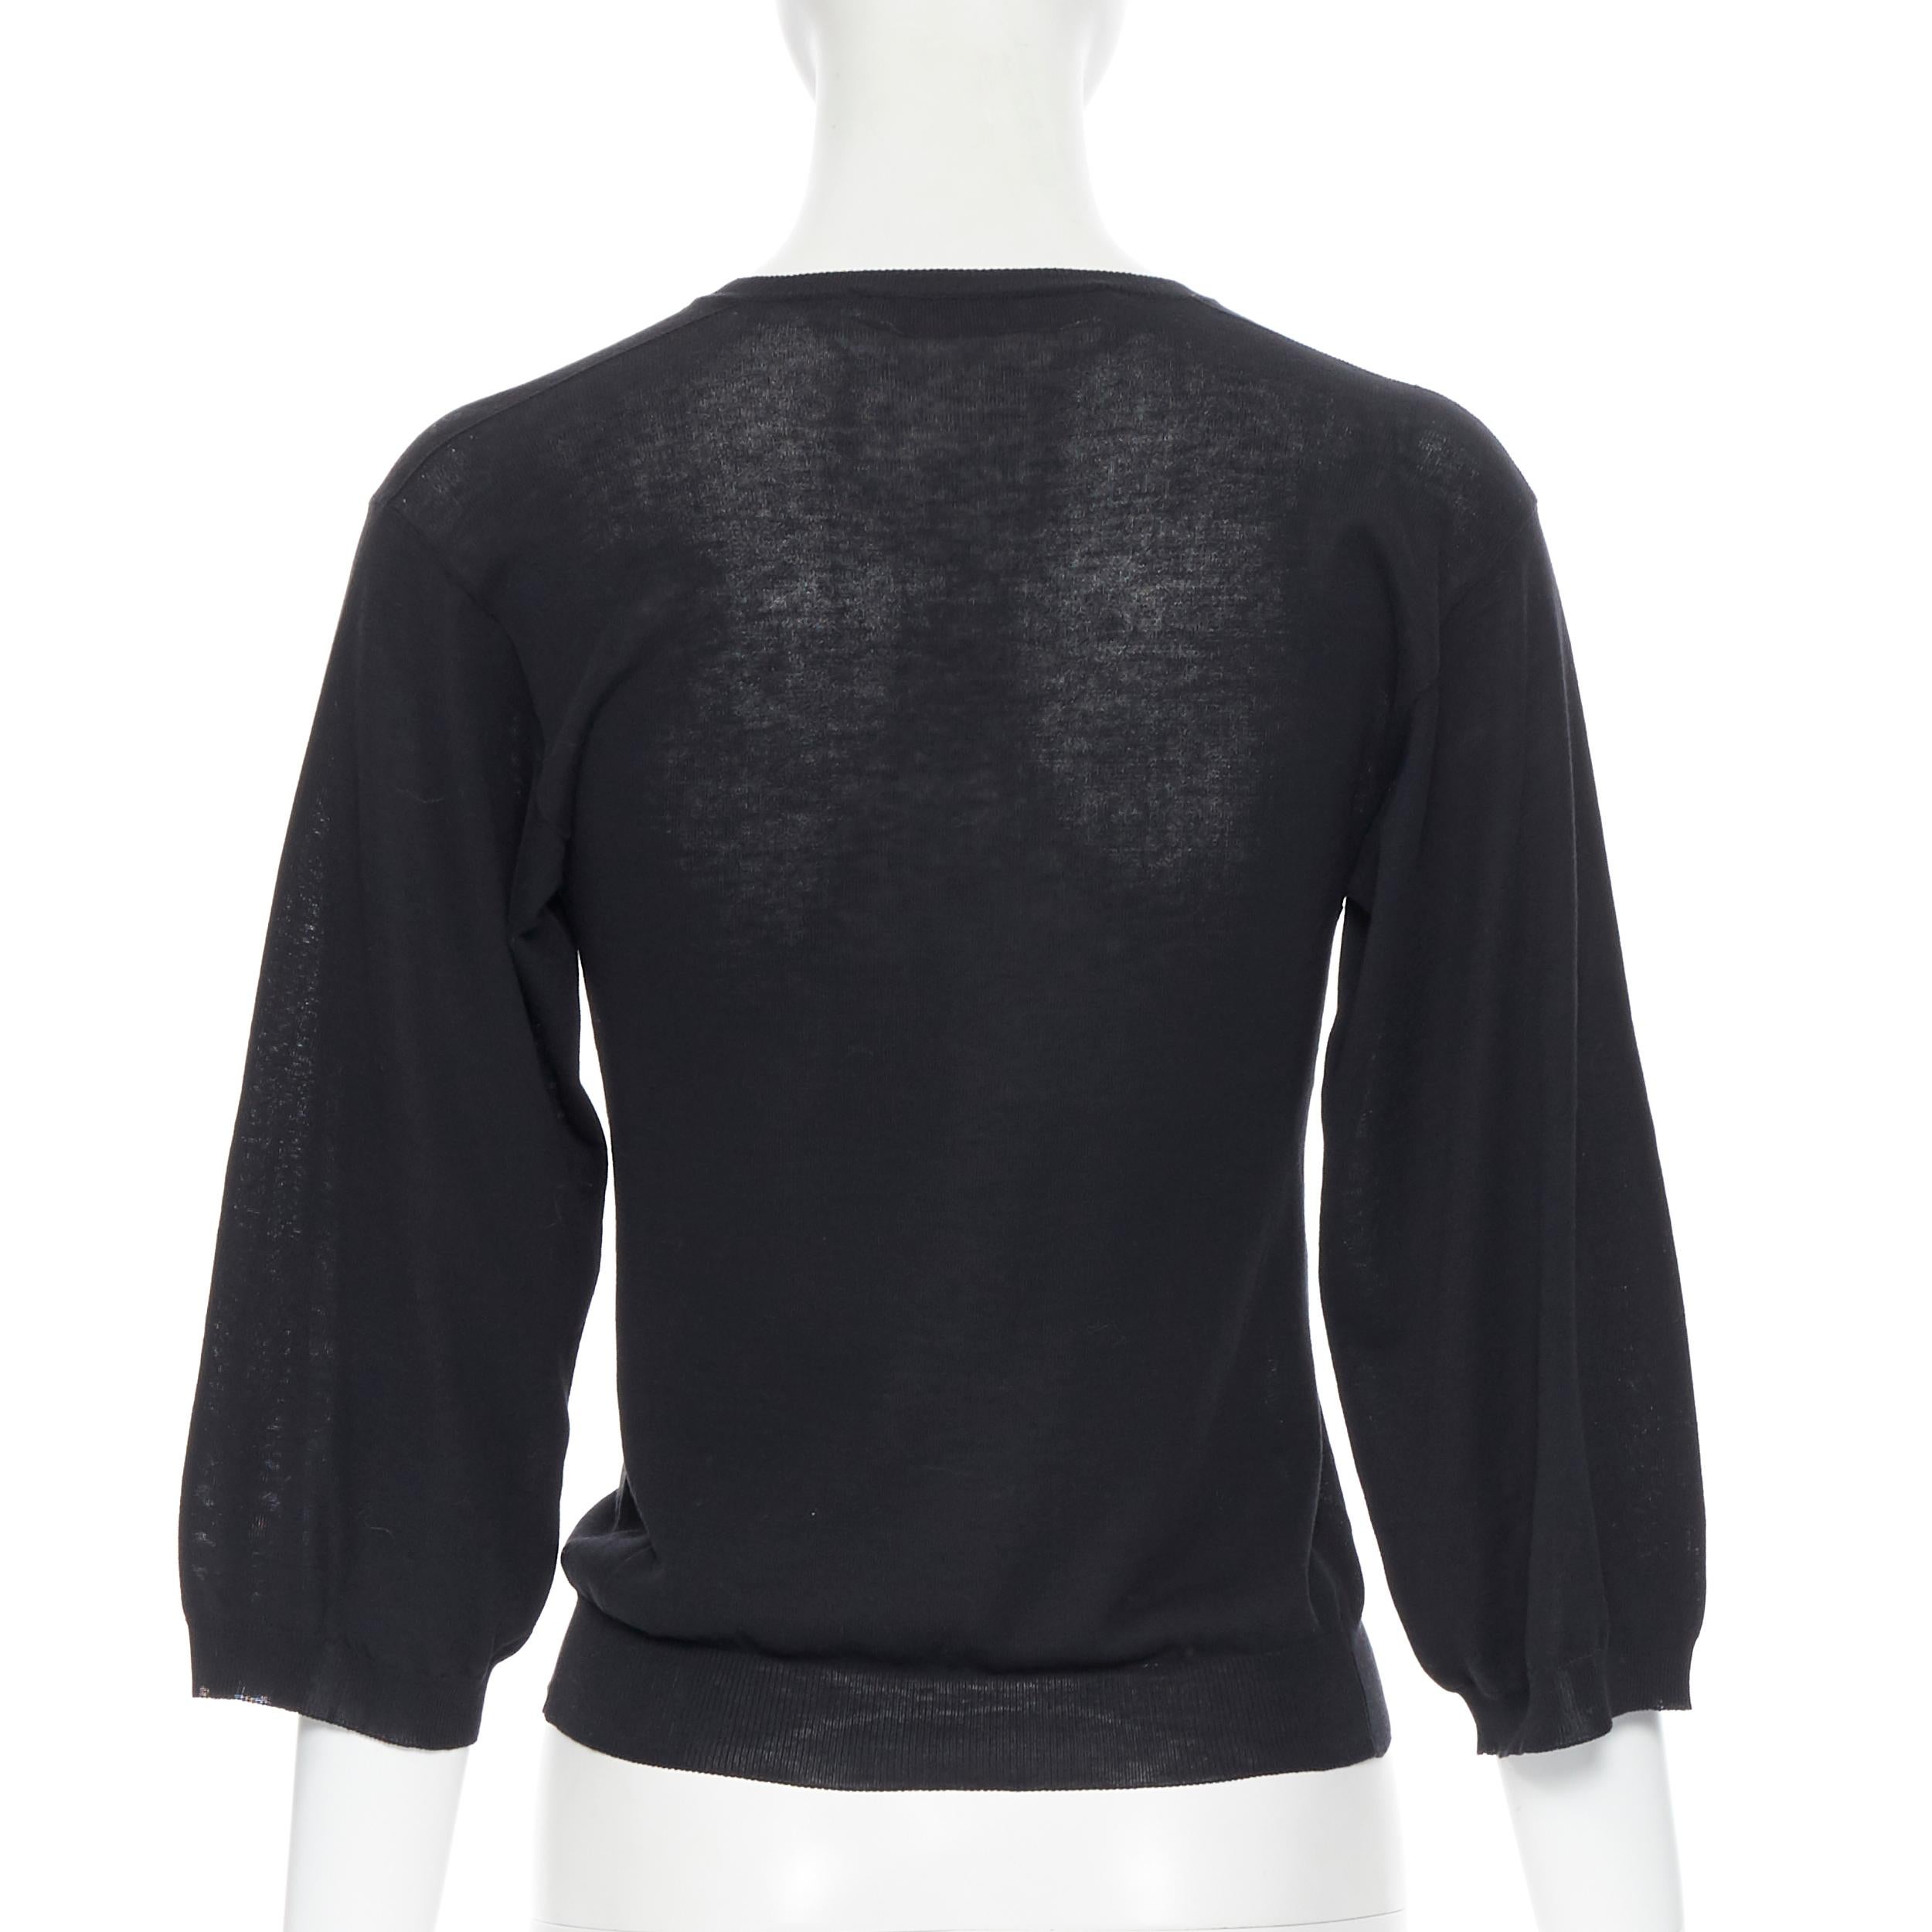 Black LANVIN Elbaz 2005 100% cotton wide sleeve silk button cardigan sweater XS